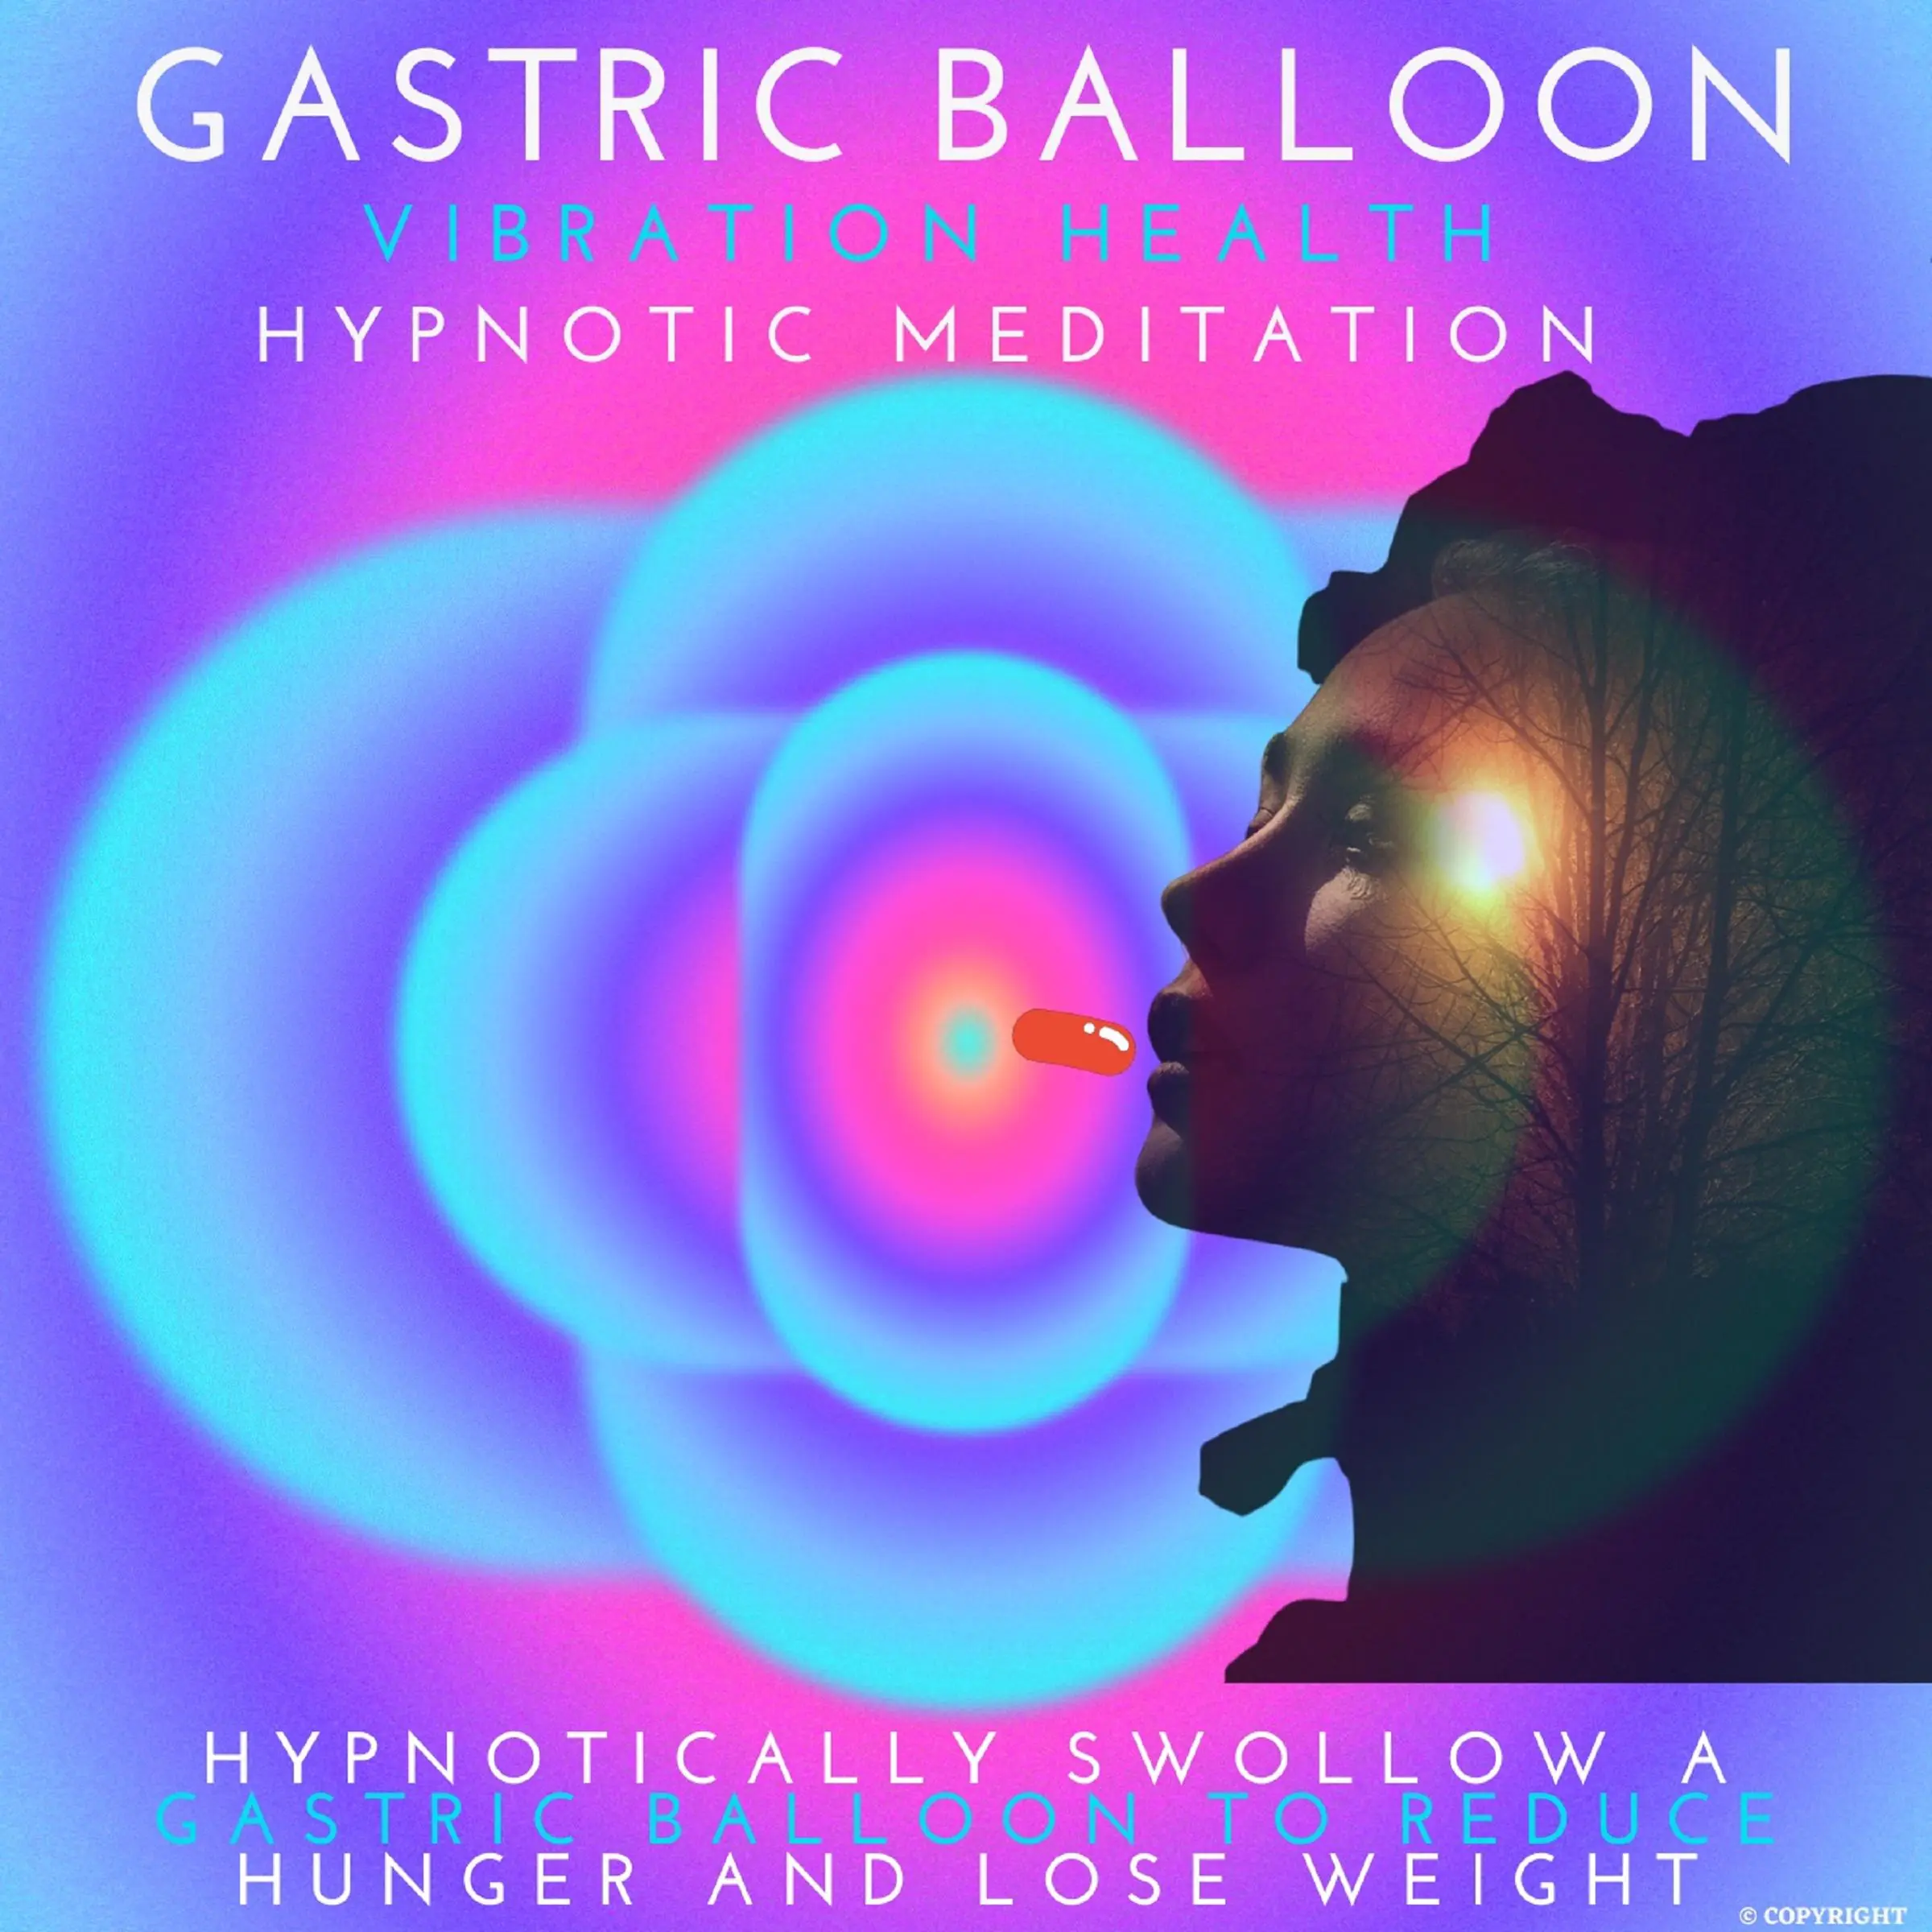 Gastric Balloon Audiobook by Vibration Health Hypnotic Meditation